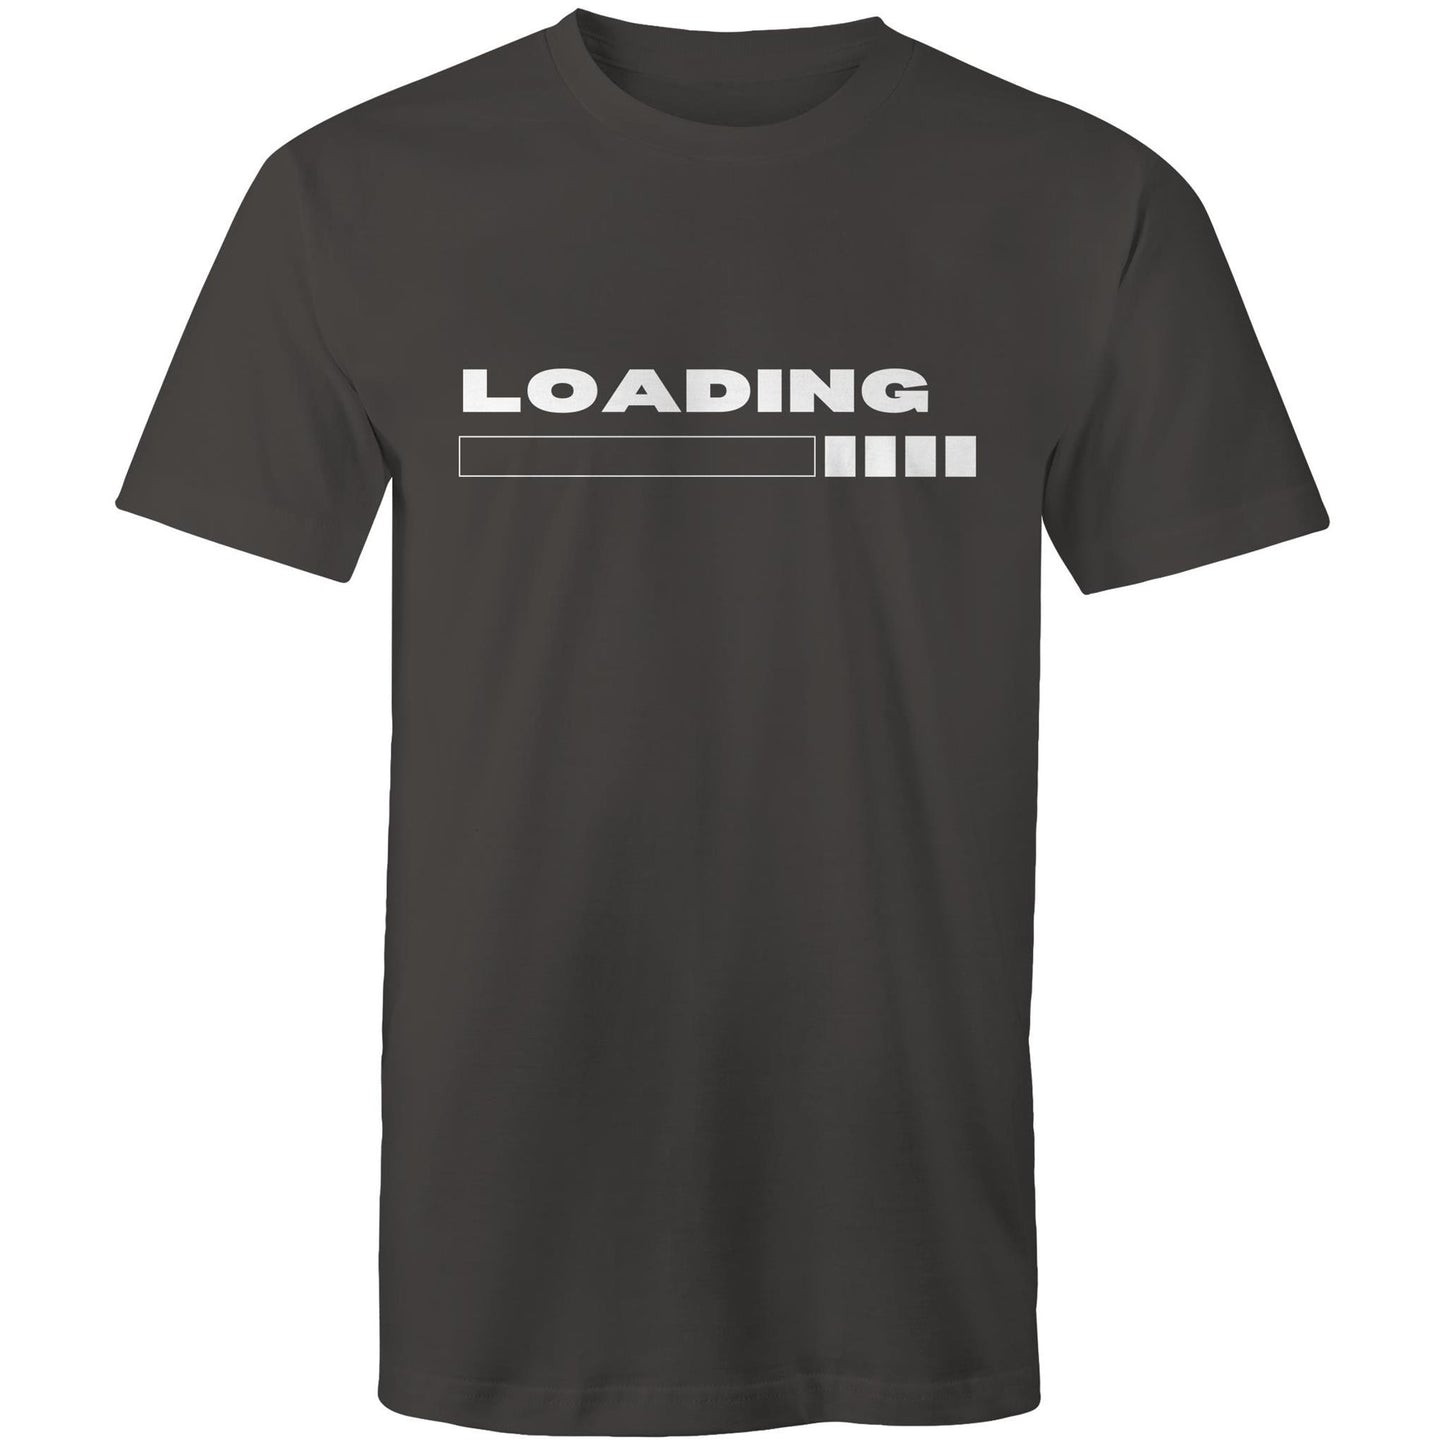 Loading - Mens T-Shirt Charcoal Mens T-shirt Tech